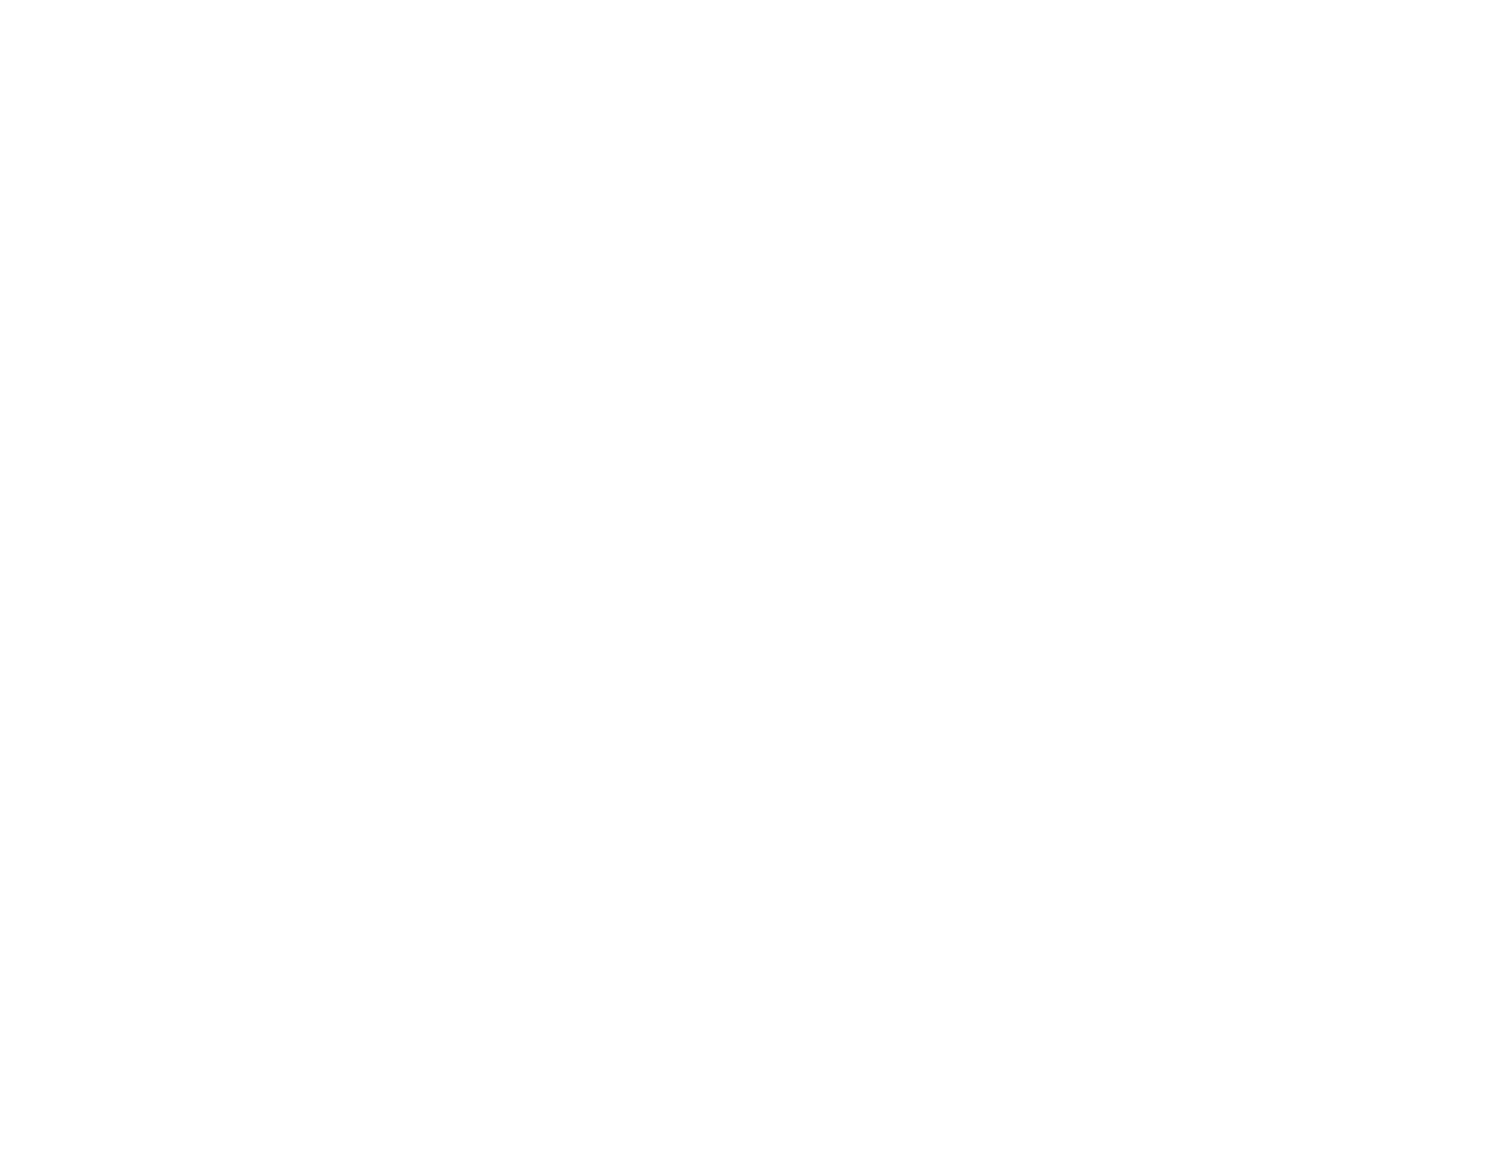 STOP LNG